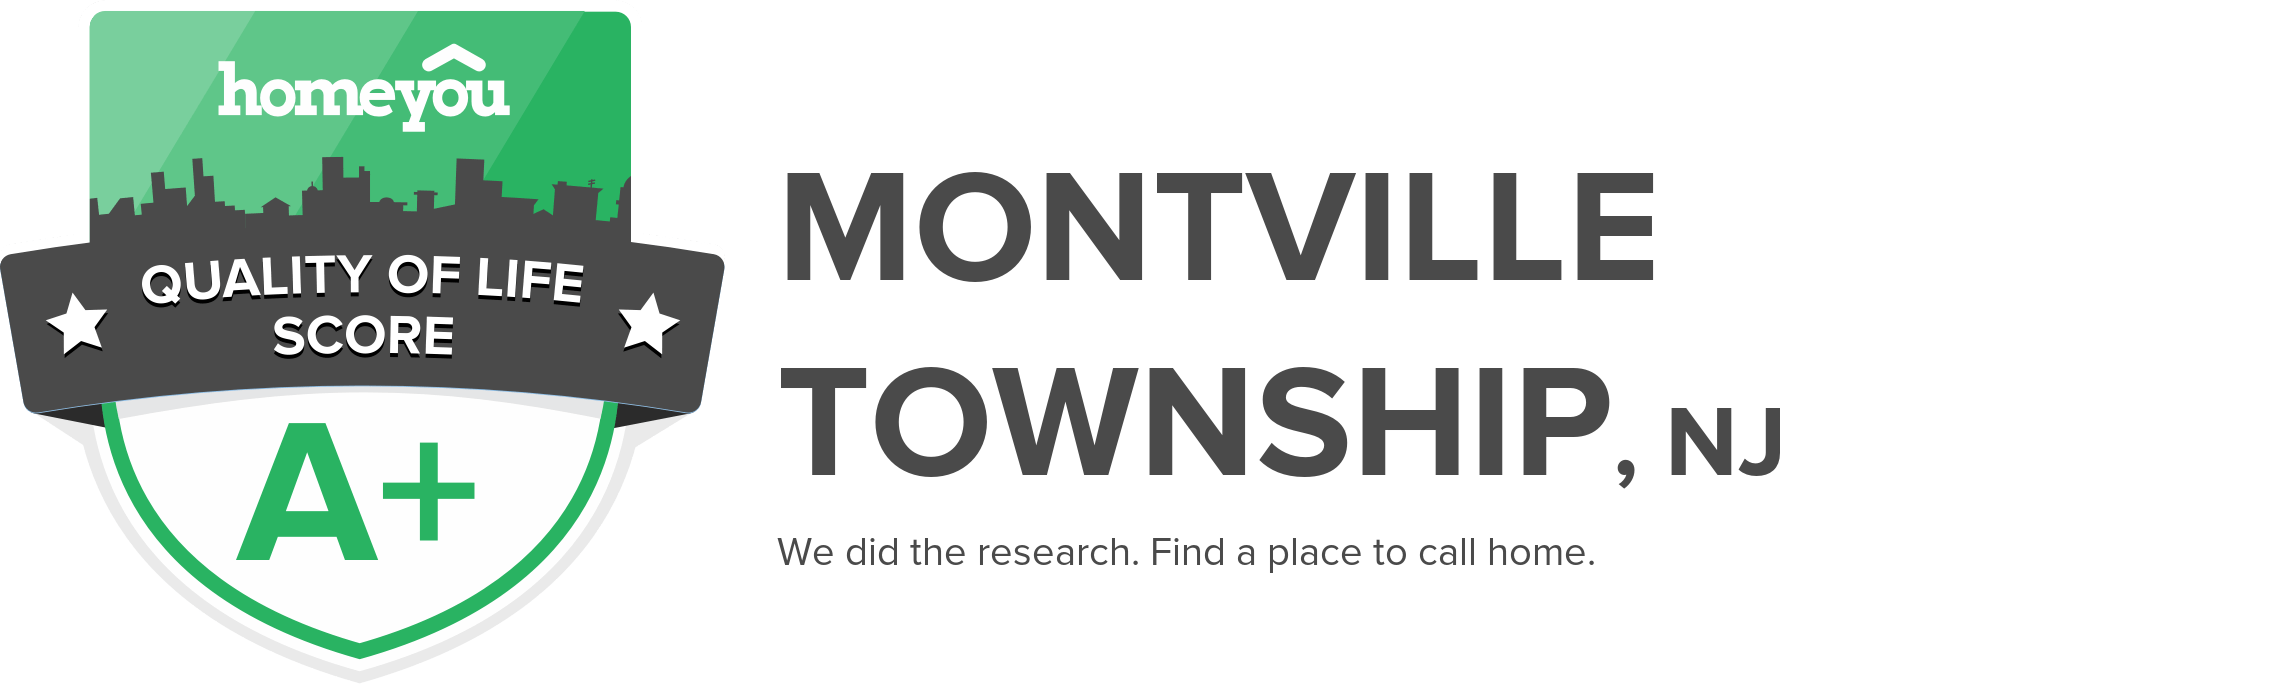 Montville Township, NJ